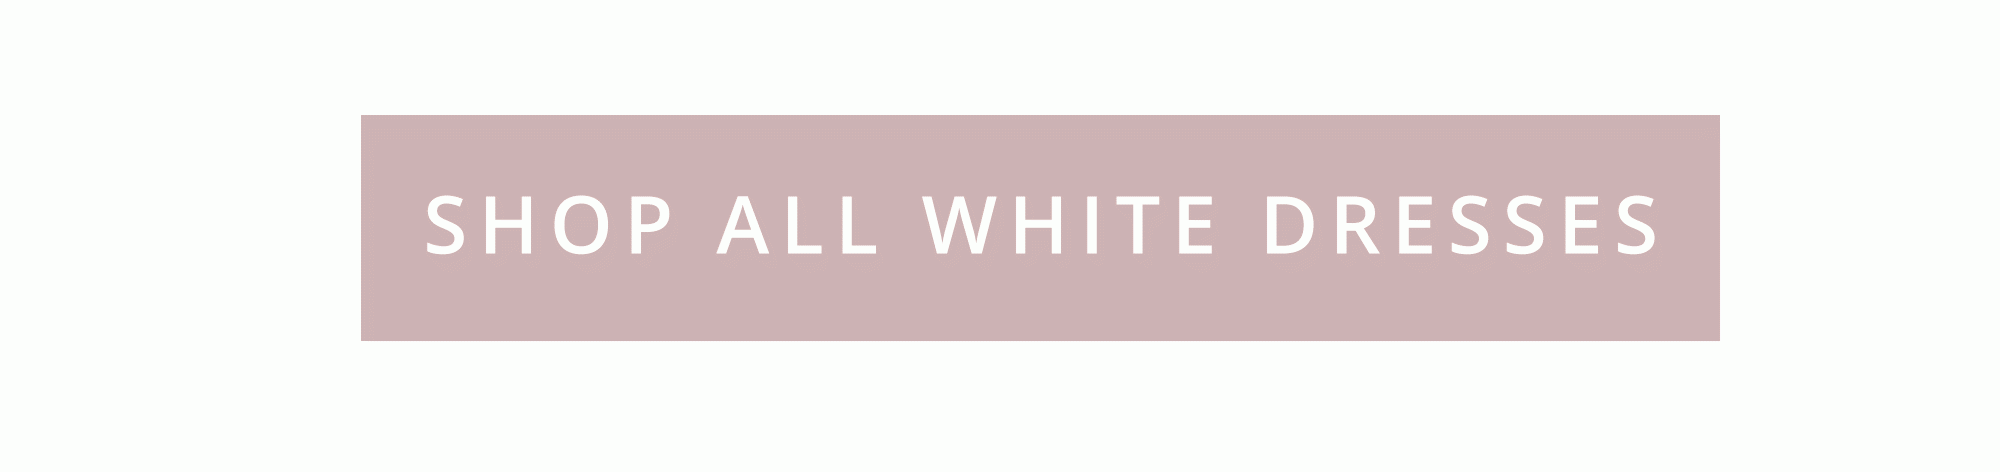 shop all white